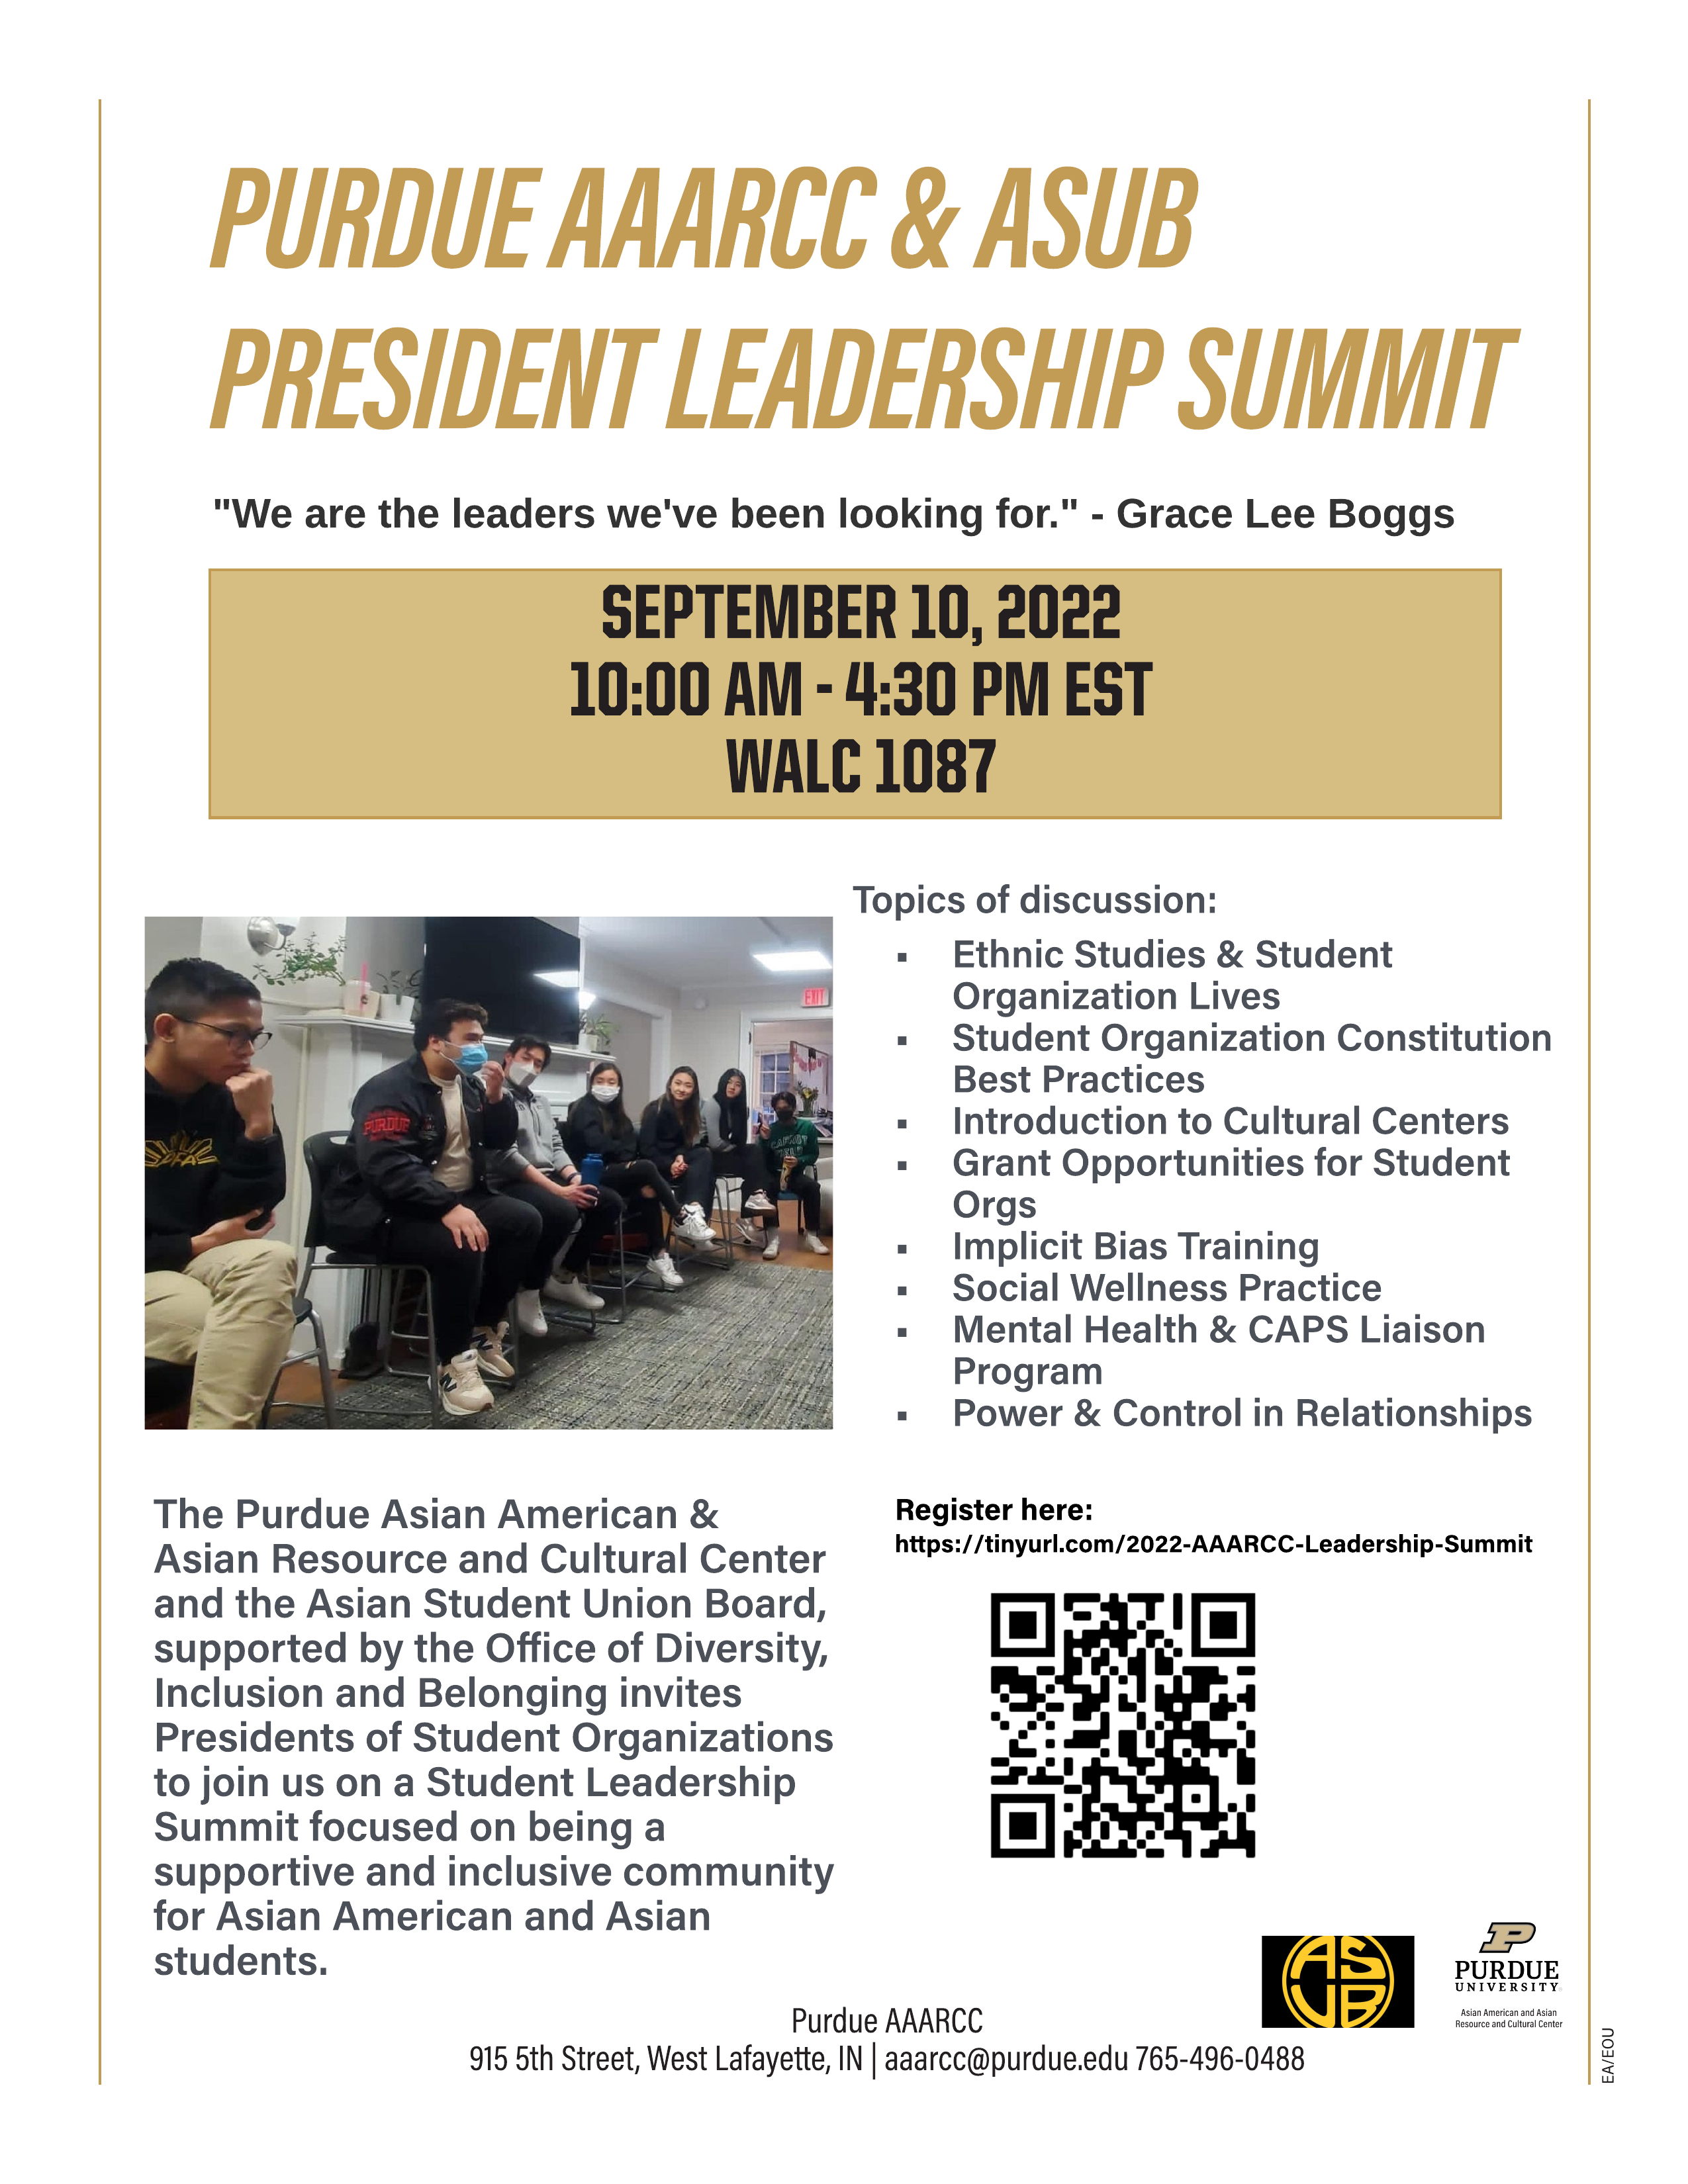 AAARCC-x-ASUB-Leadership-Summit.png